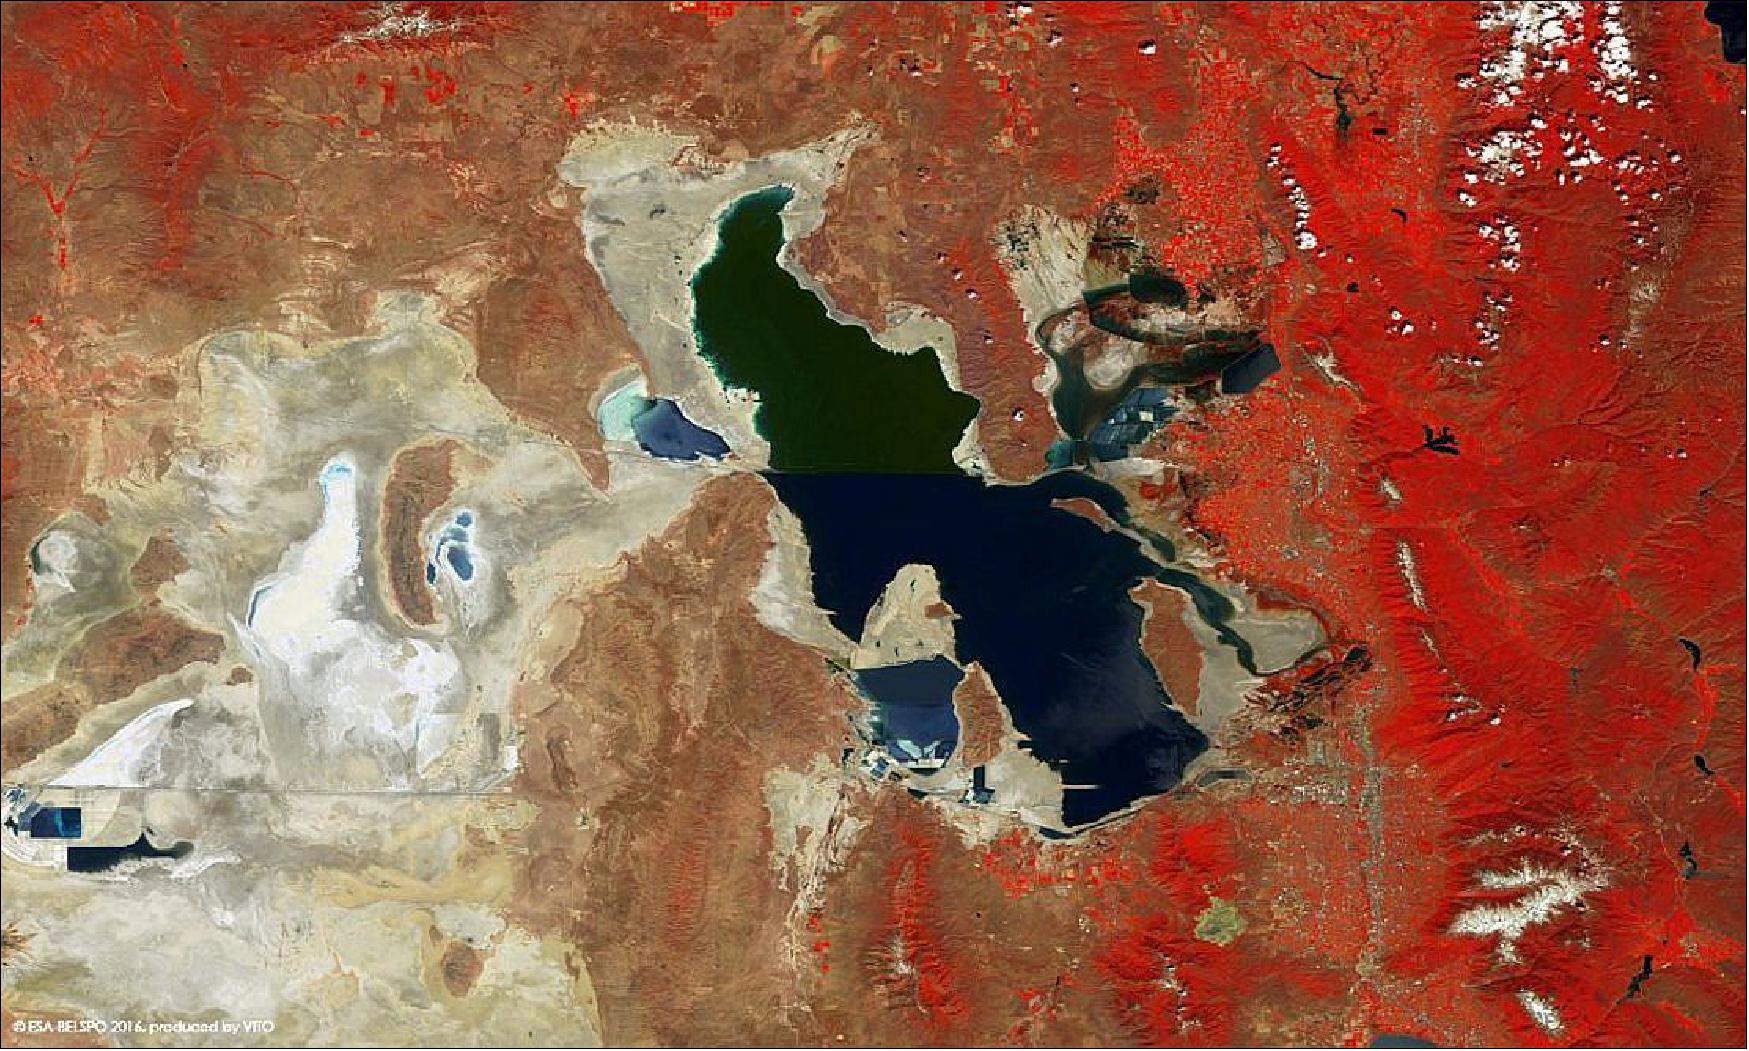 Figure 44: Great Salt Lake, the largest salt lake in the western hemisphere, captured by ESA's PROBA-V satellite in June 2016 (image credit: ESA/BELSPO, provided by VITO)